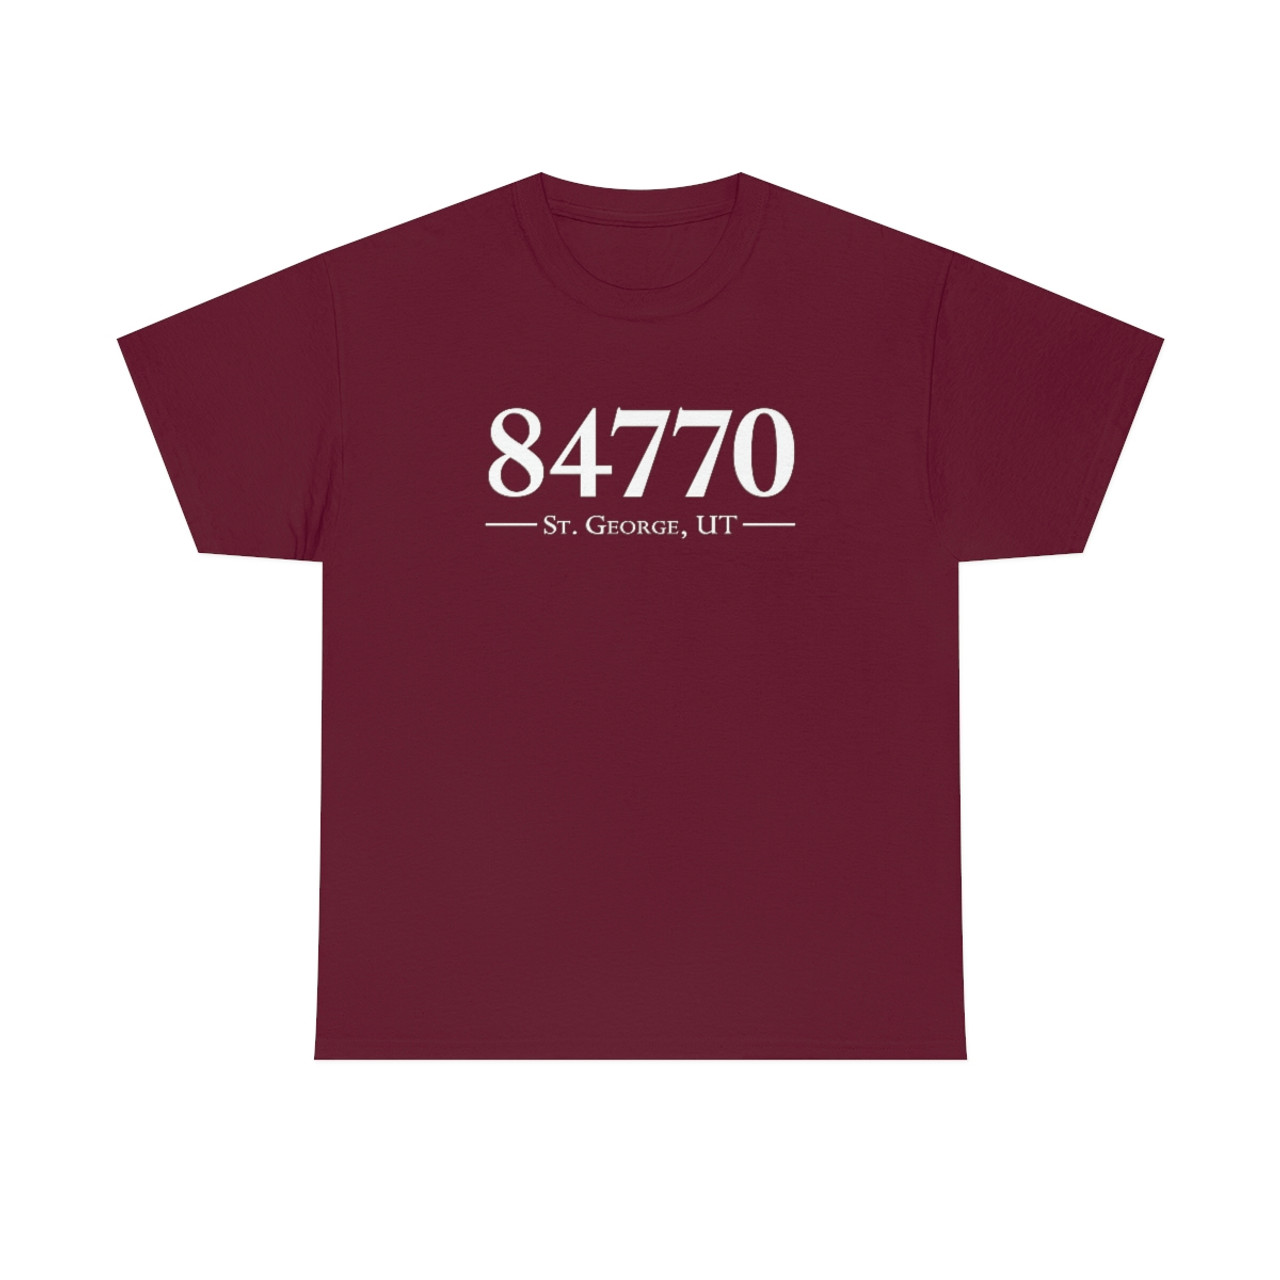 primi UTAH George, Zip Code - St. 84770 T-Shirt UT